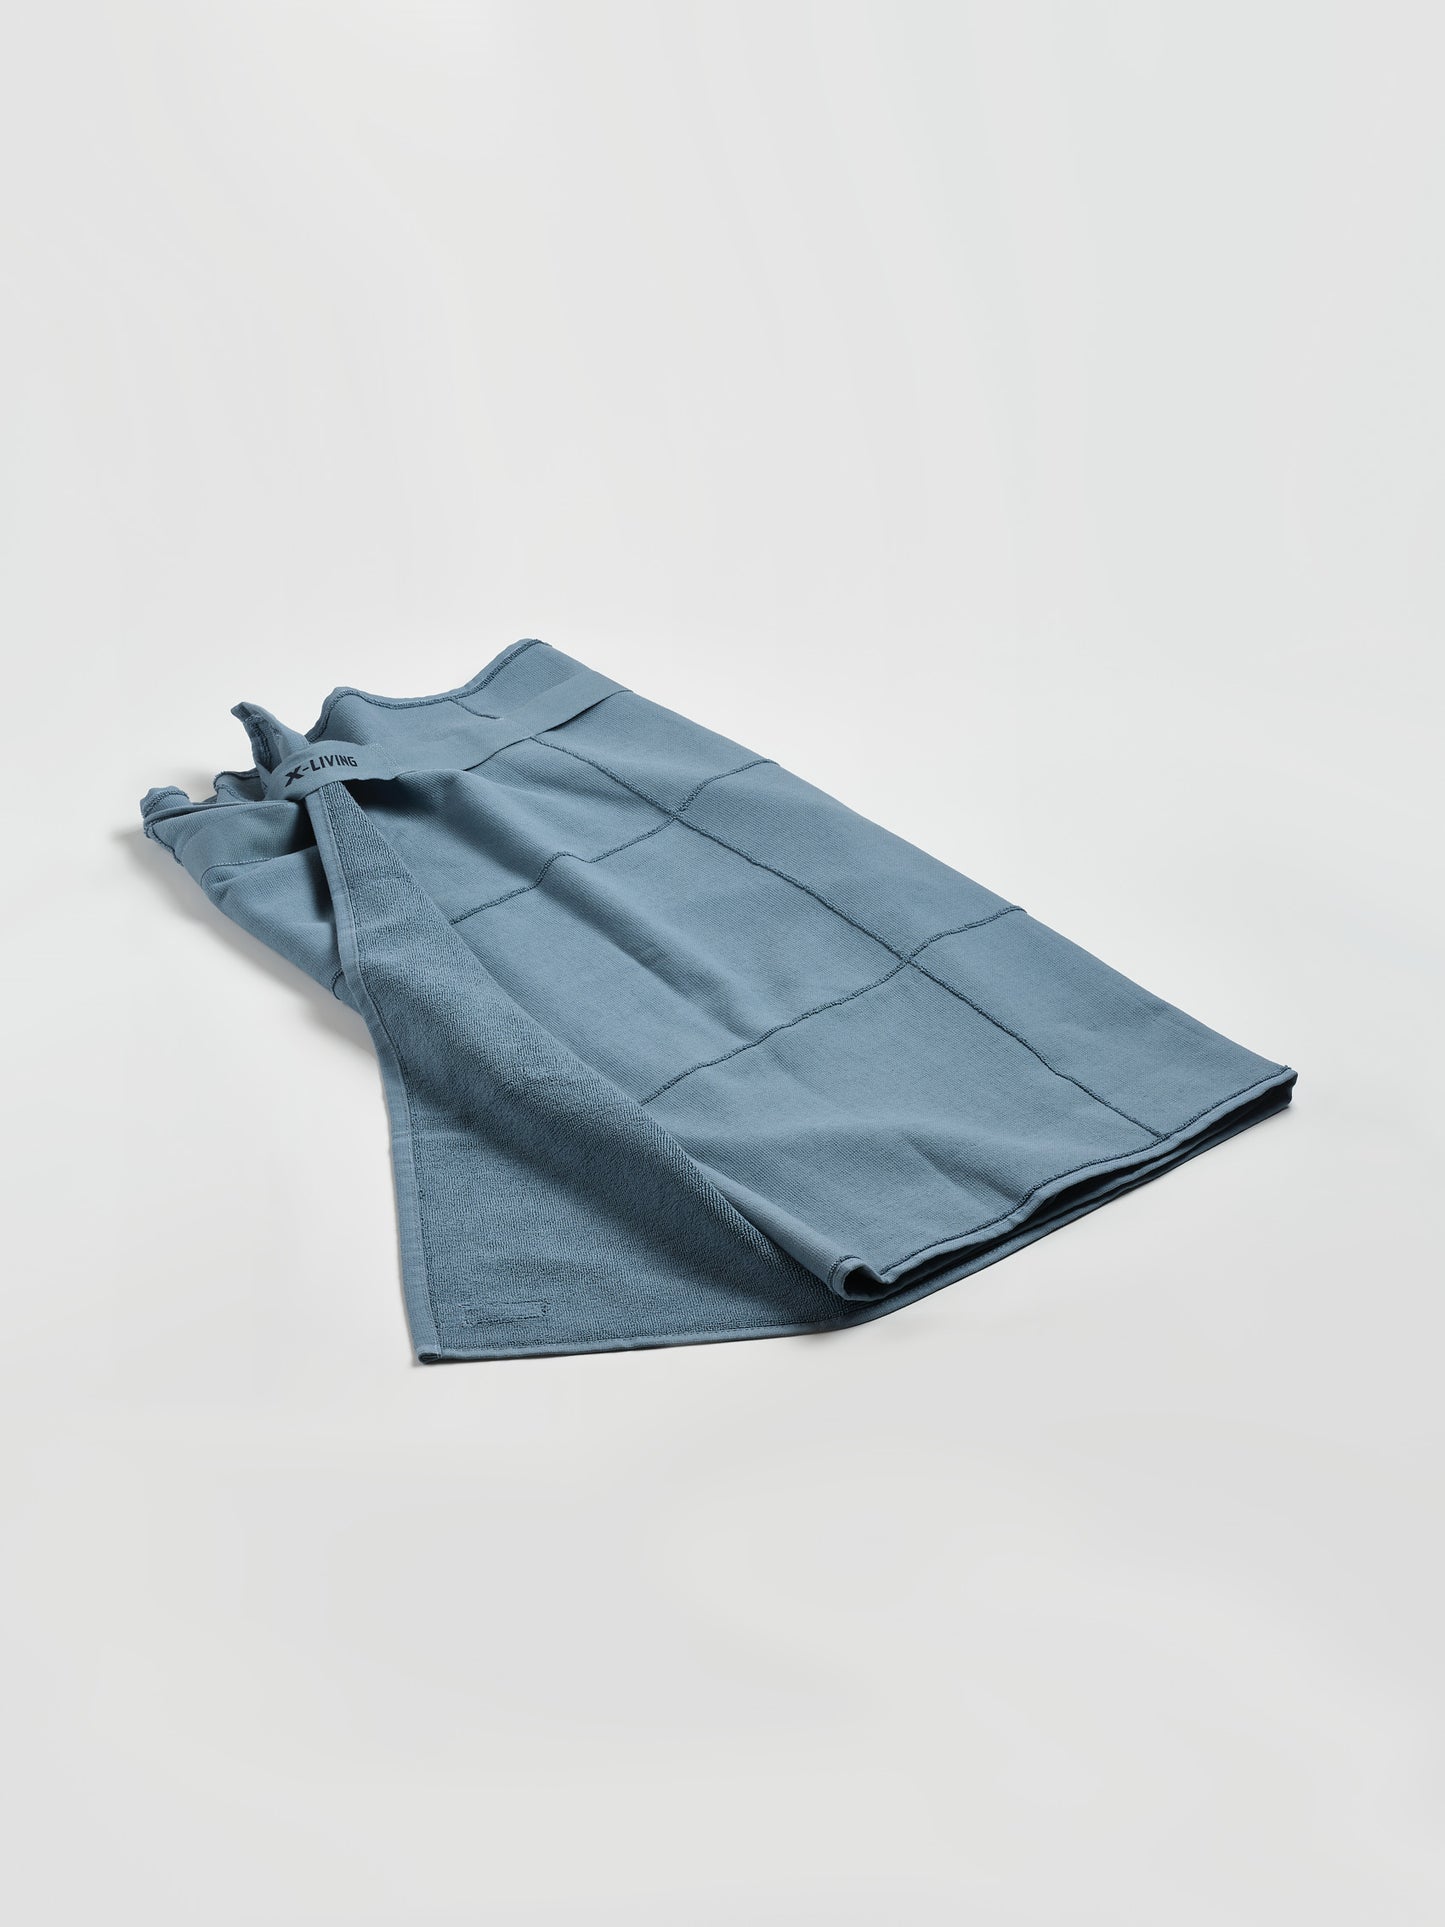 Calm Towel To wrap - Grey Blue (70x160)